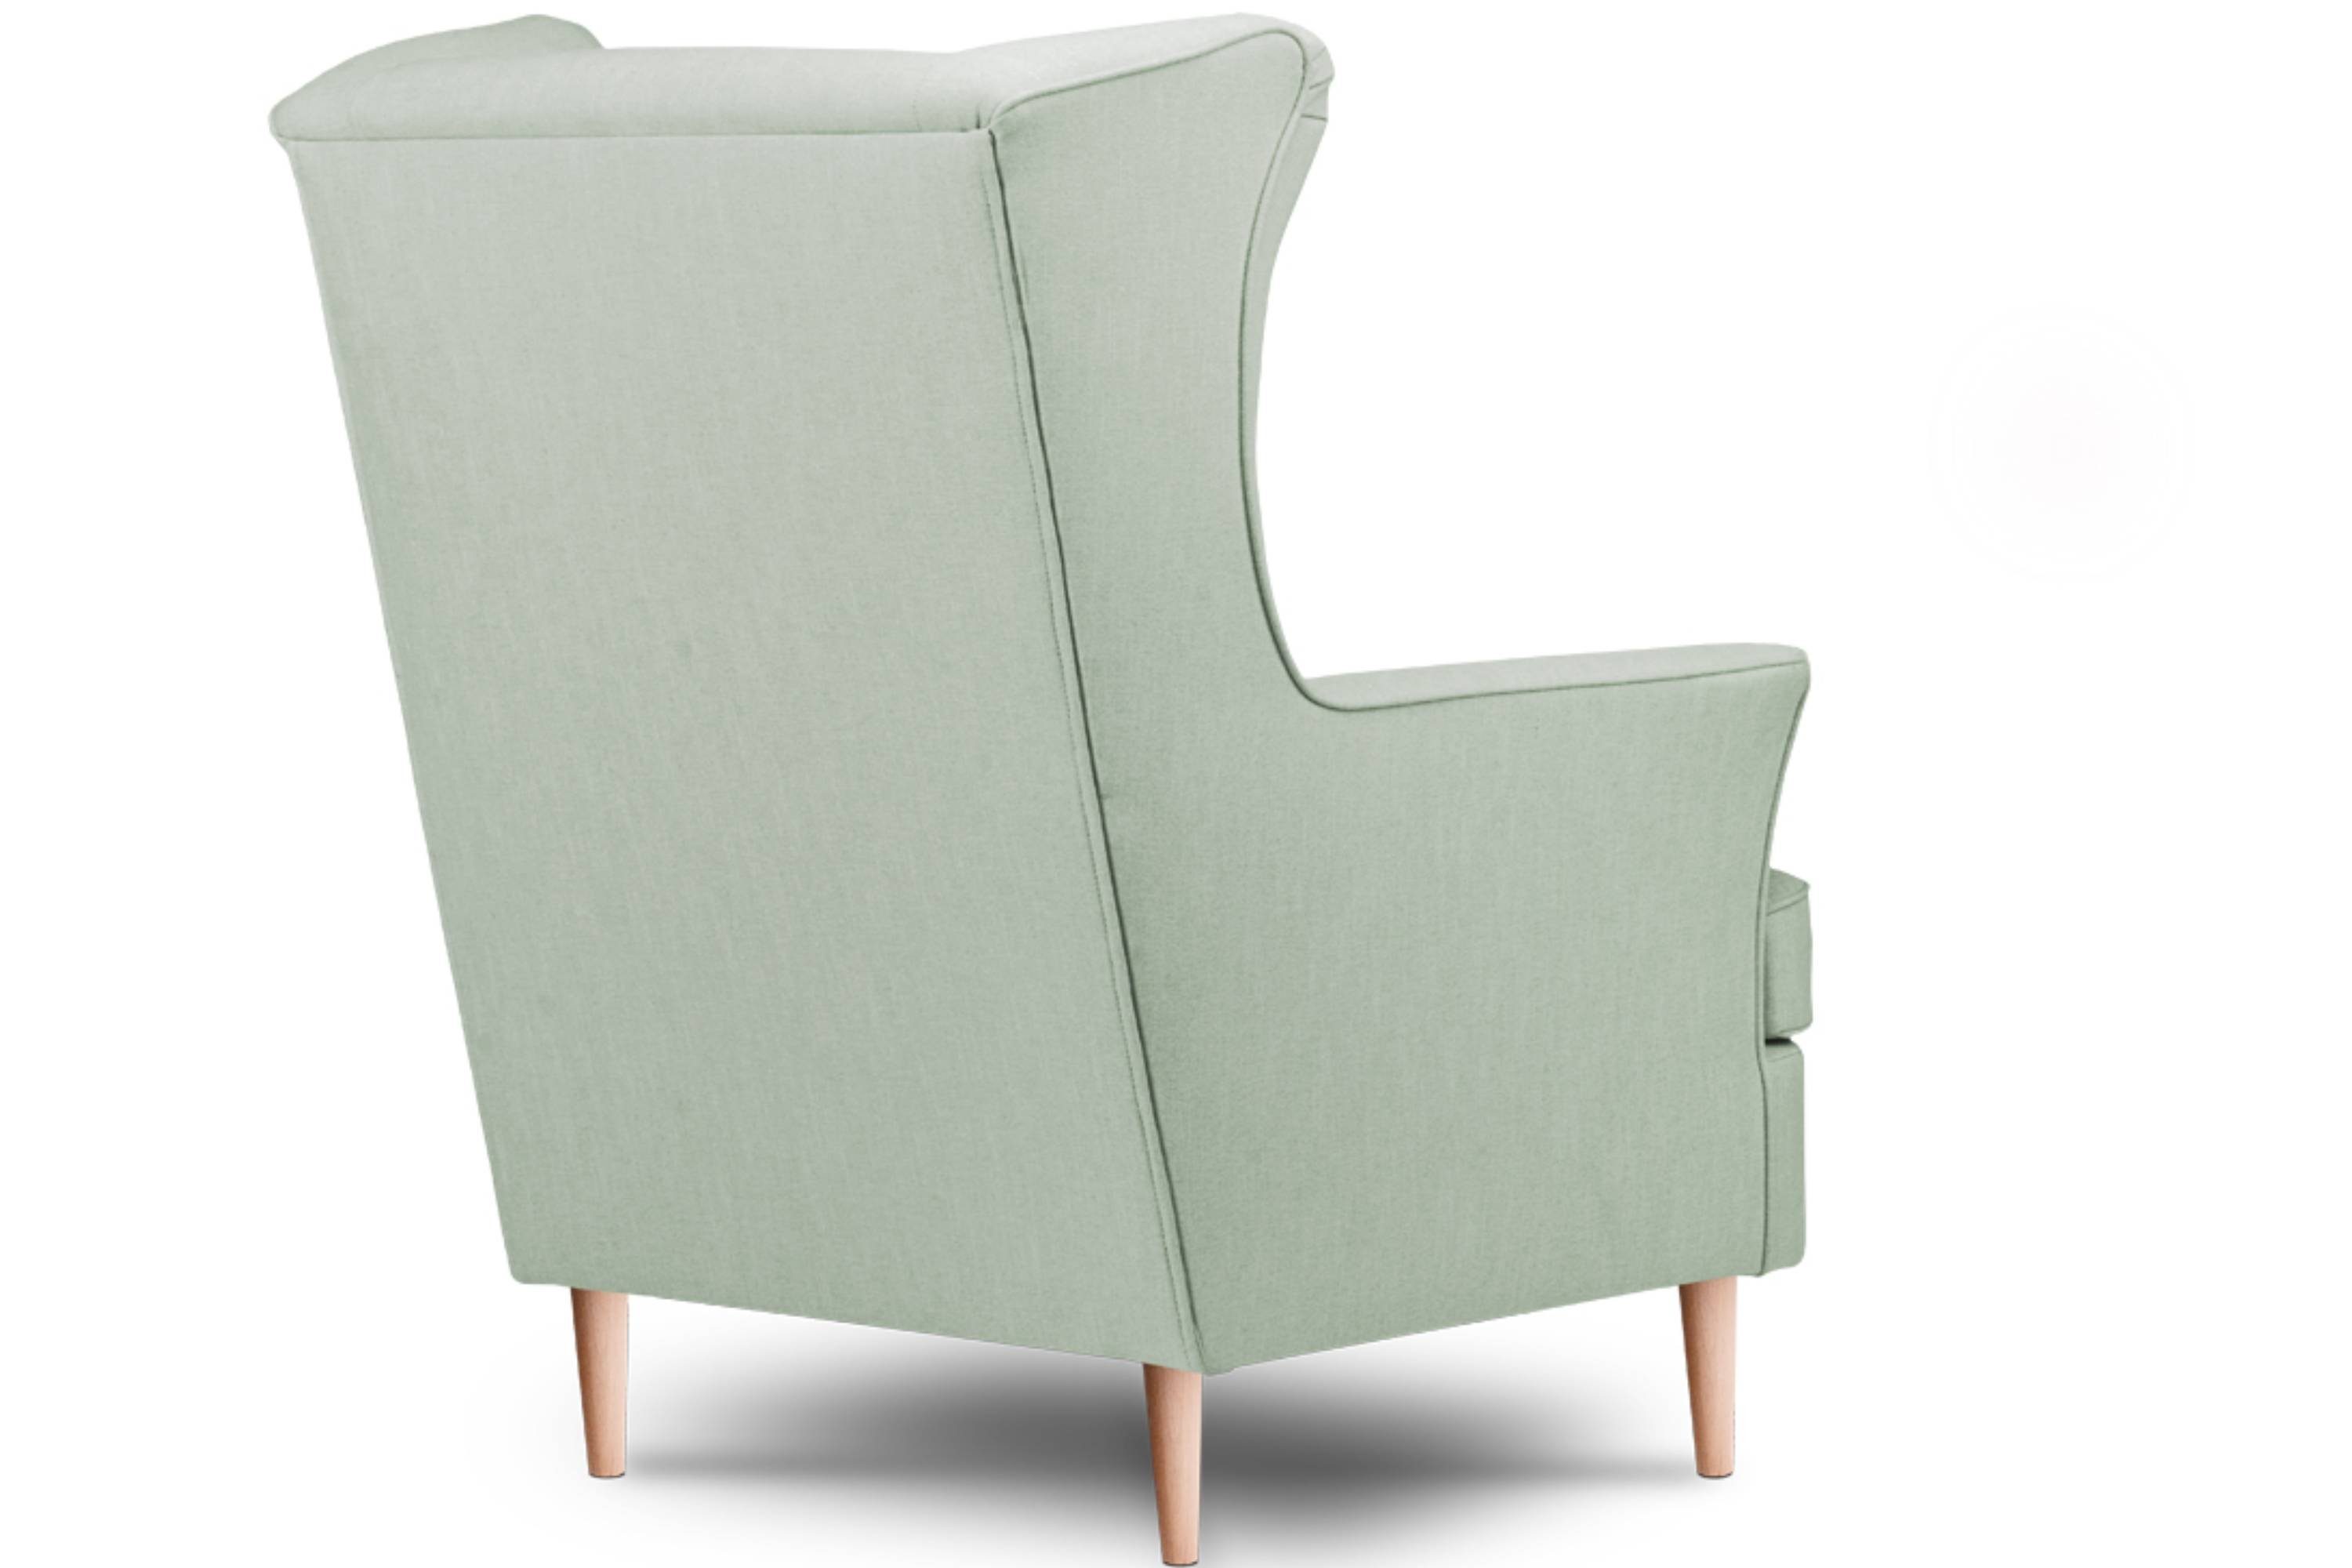 STRALIS Sessel, Design, Konsimo zeitloses inklusive Füße, hohe Ohrensessel Kissen dekorativem